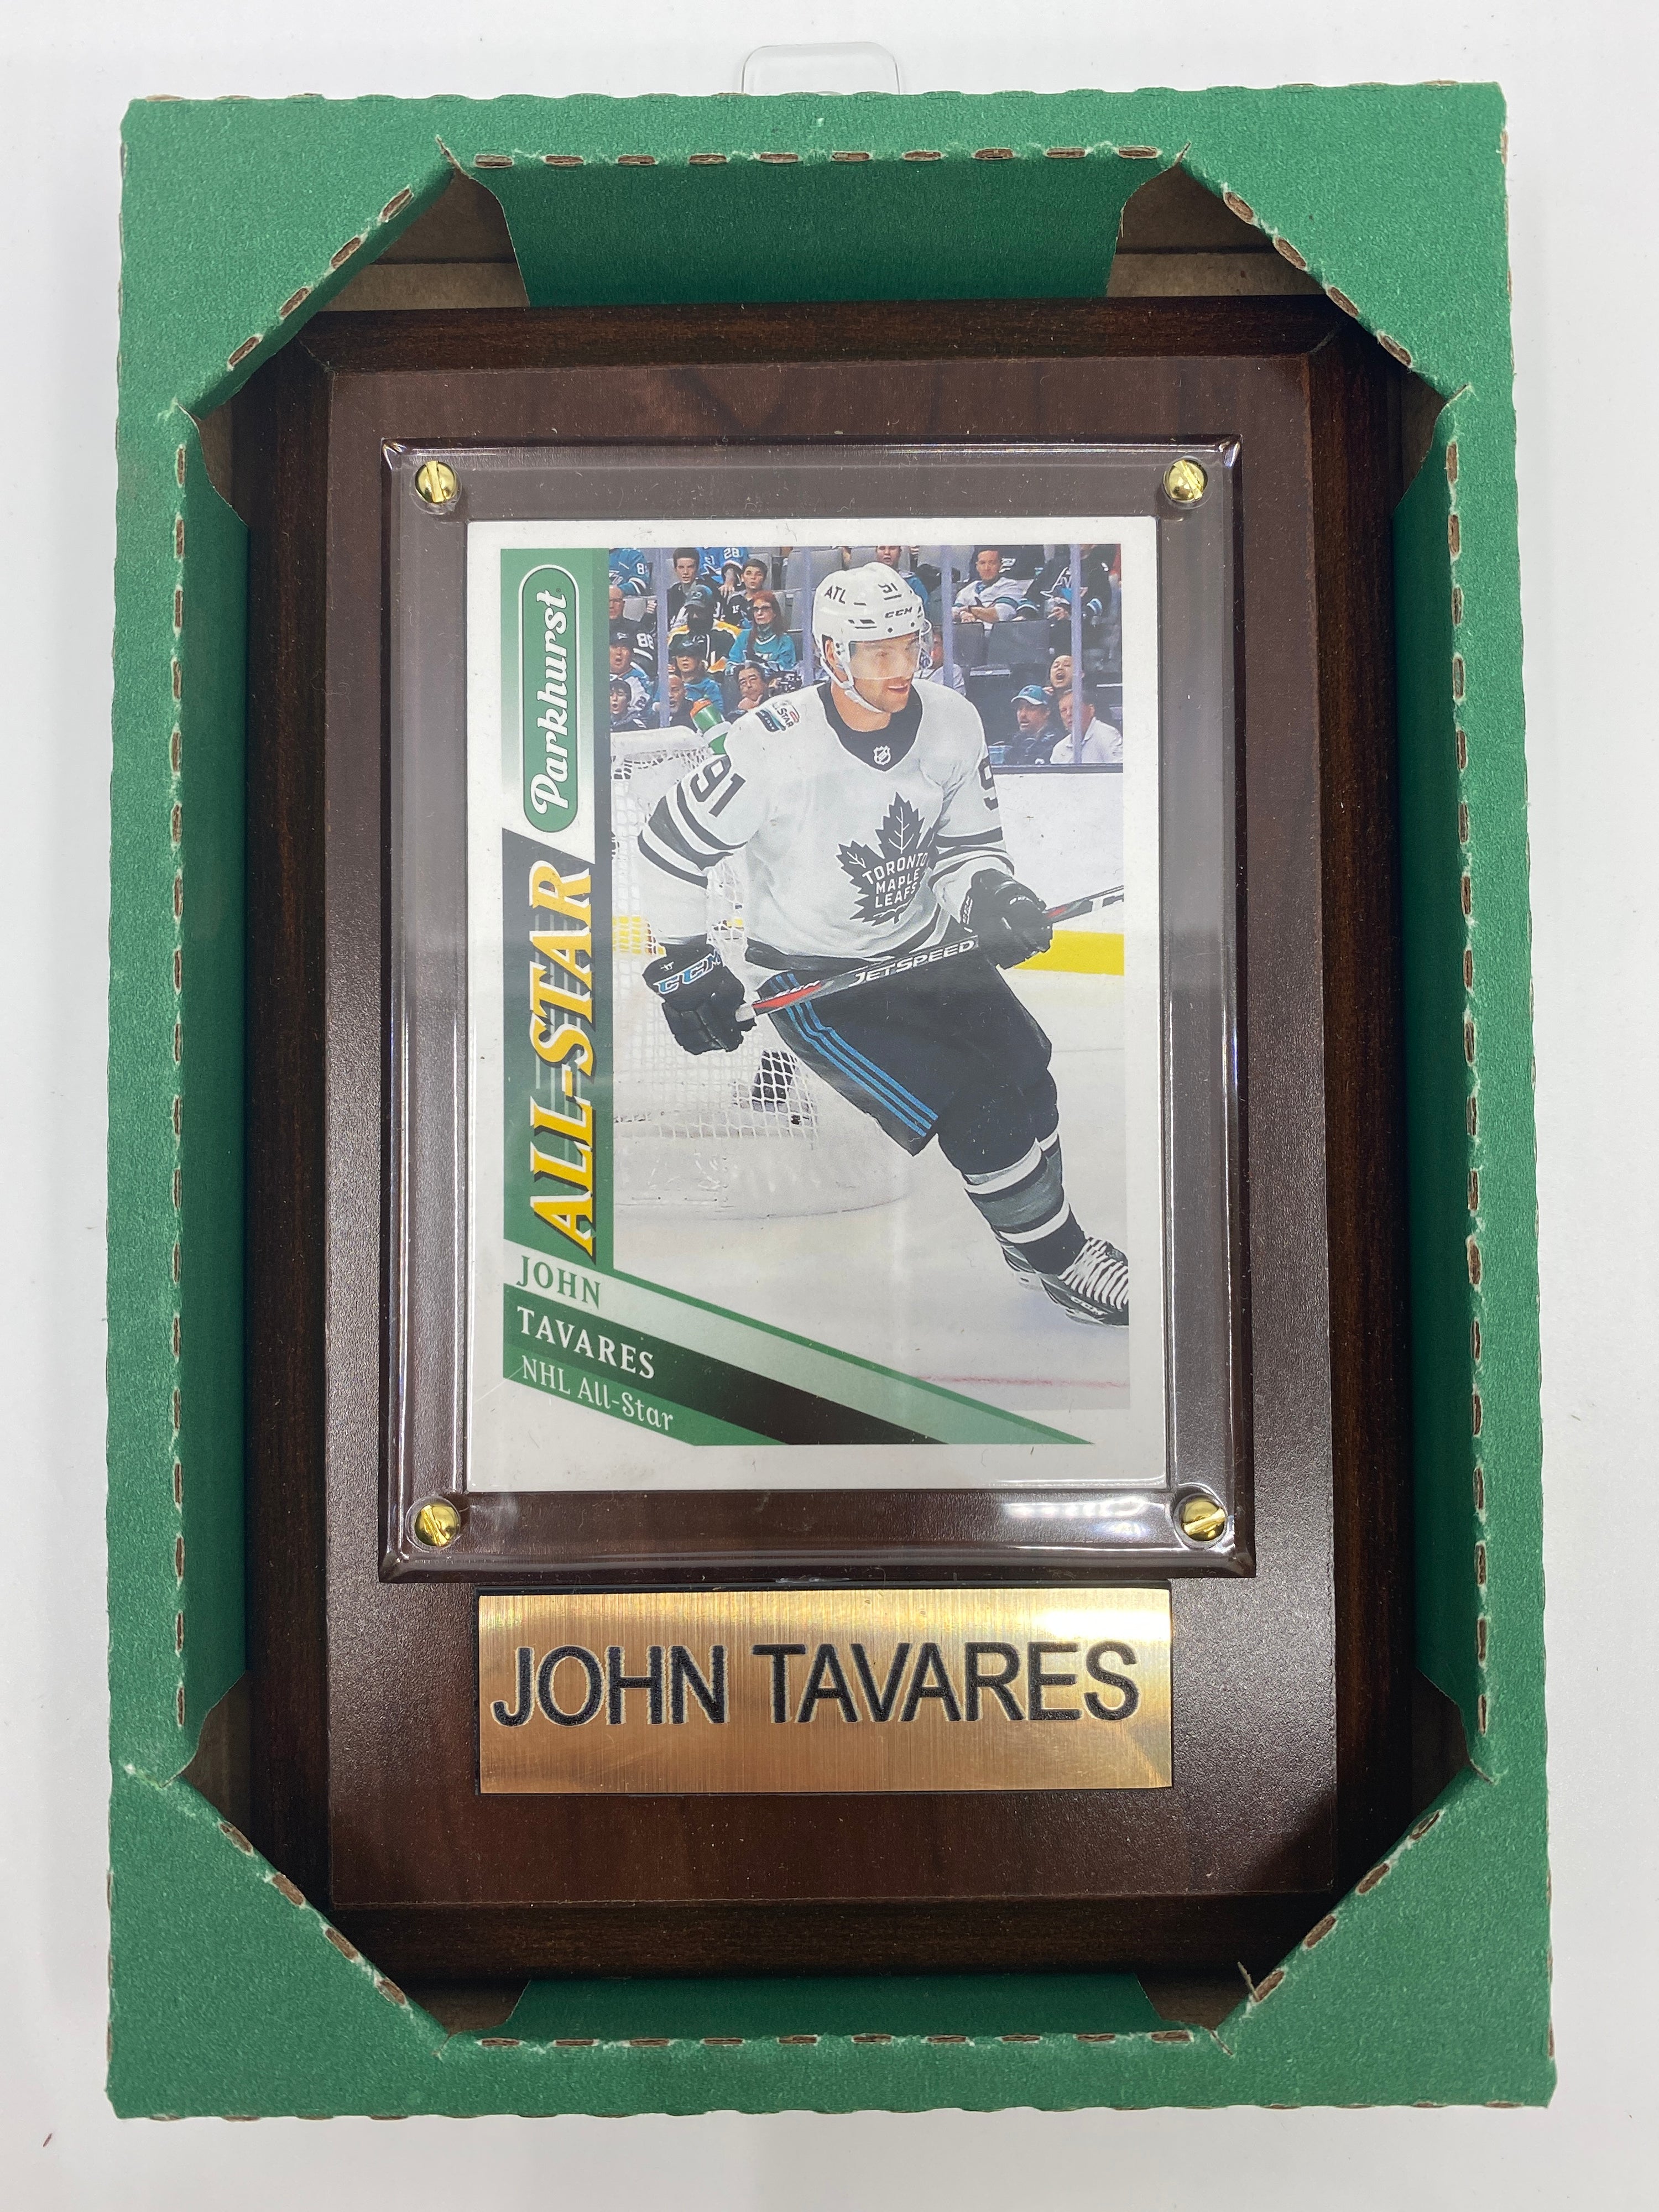 NHL Plaque with card 4x6 Leafs John Tavares